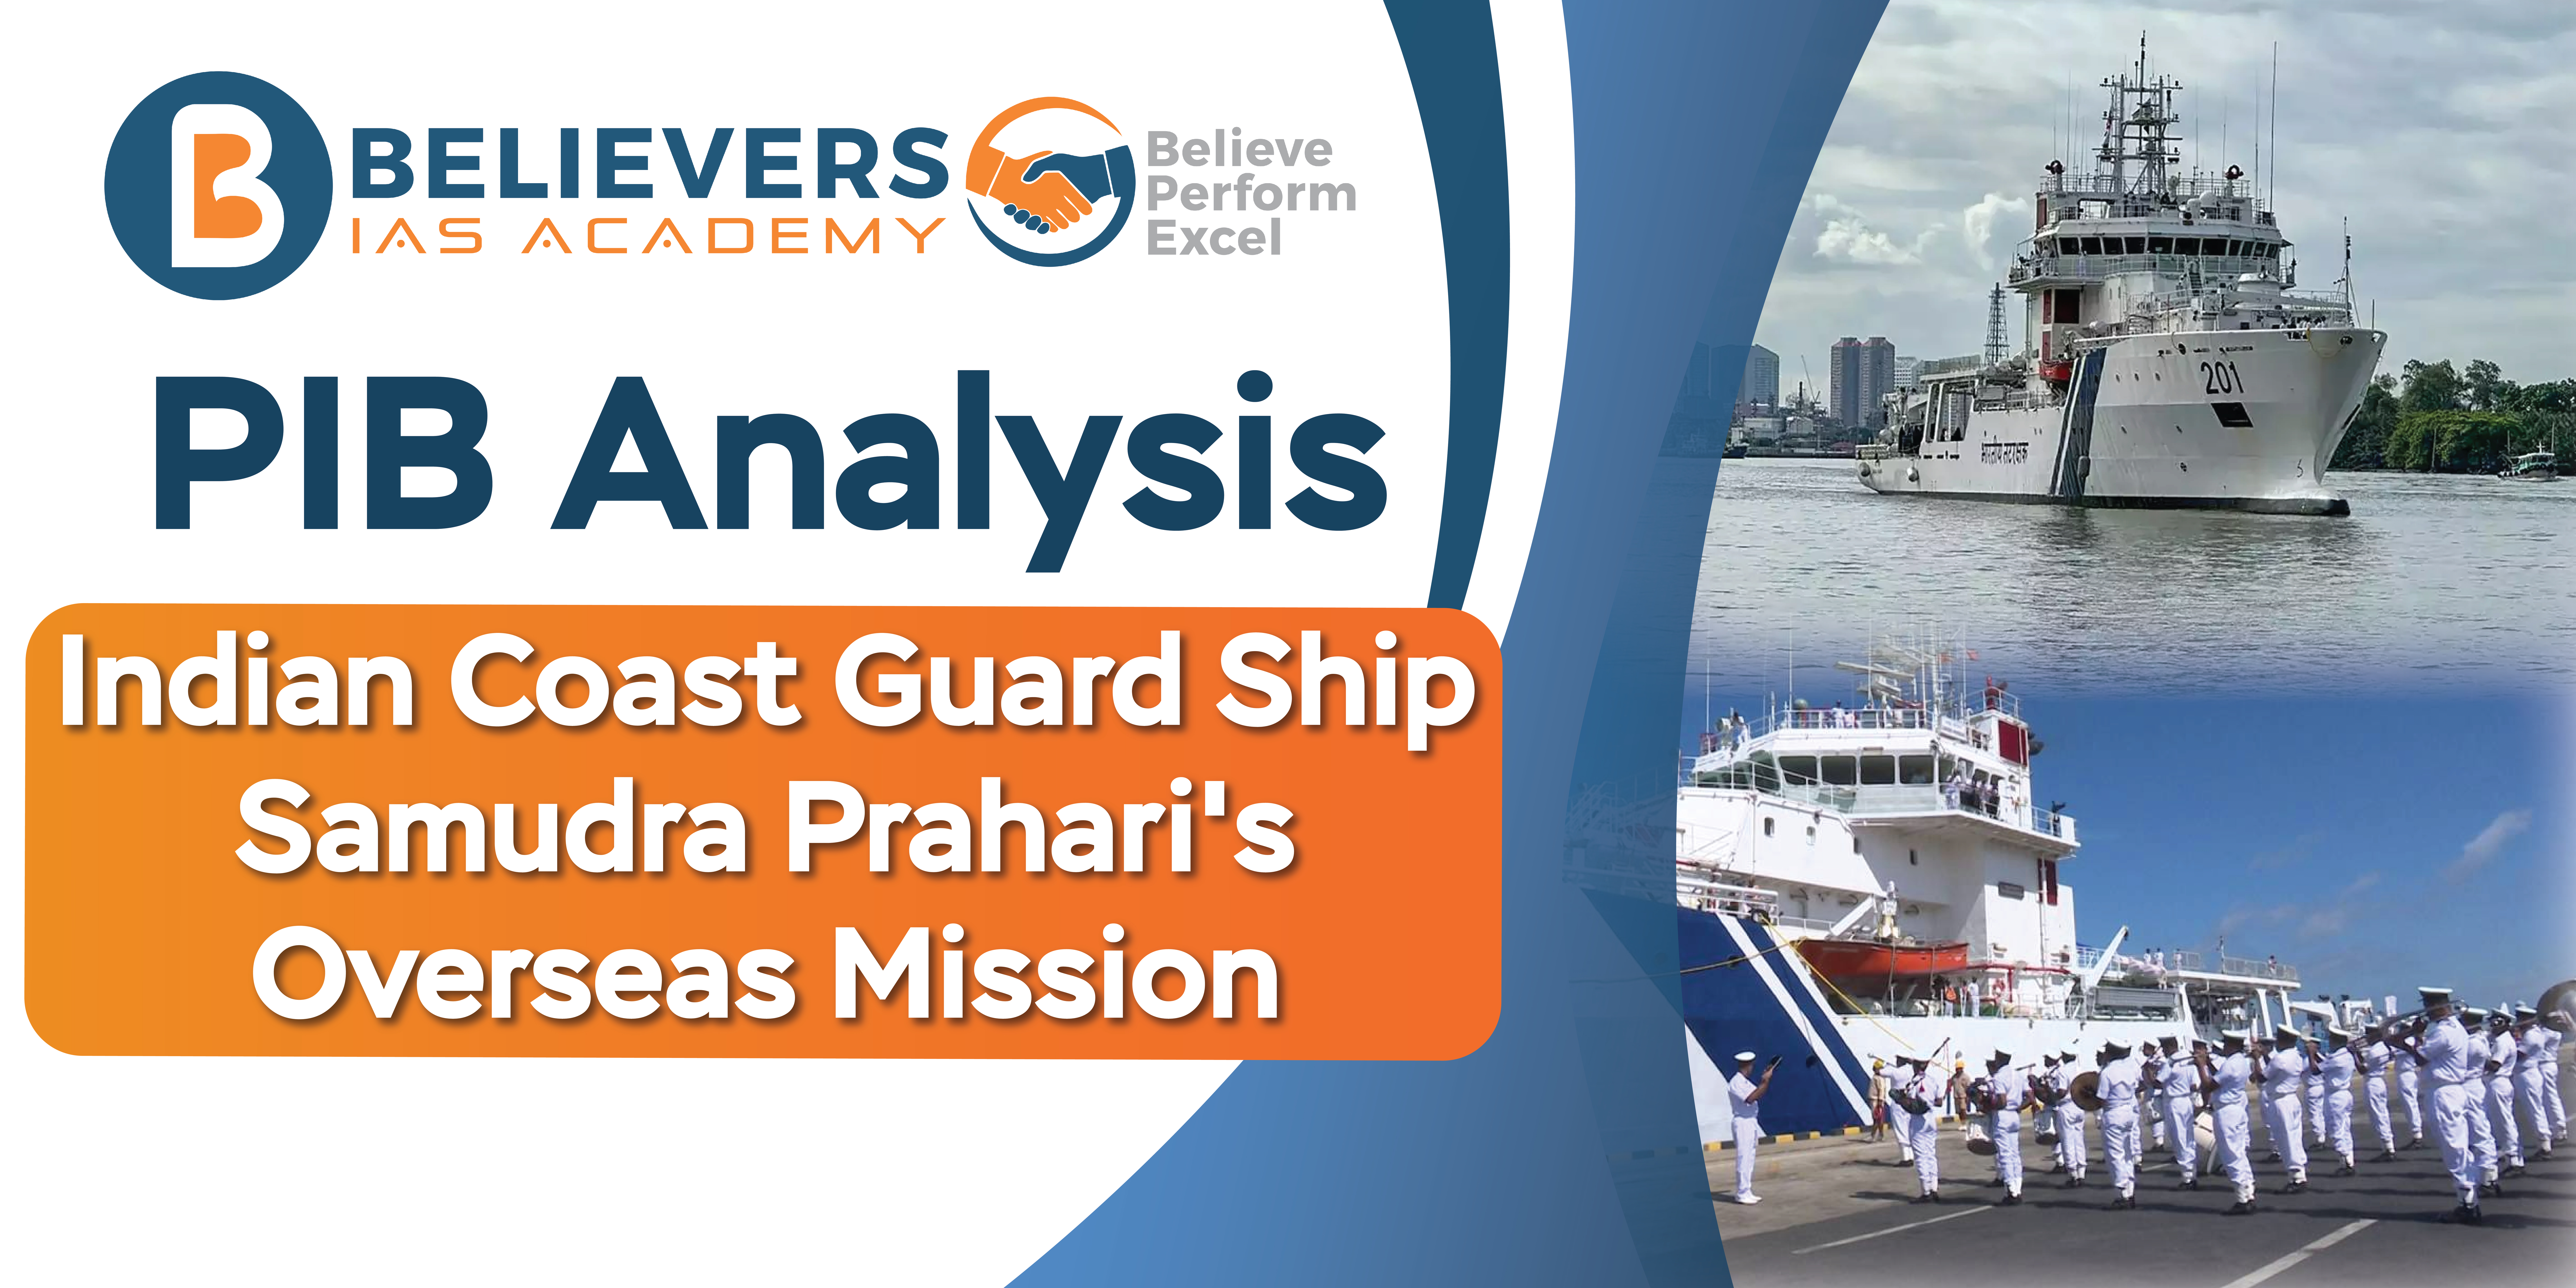 Indian Coast Guard Ship Samudra Prahari's Overseas Mission: